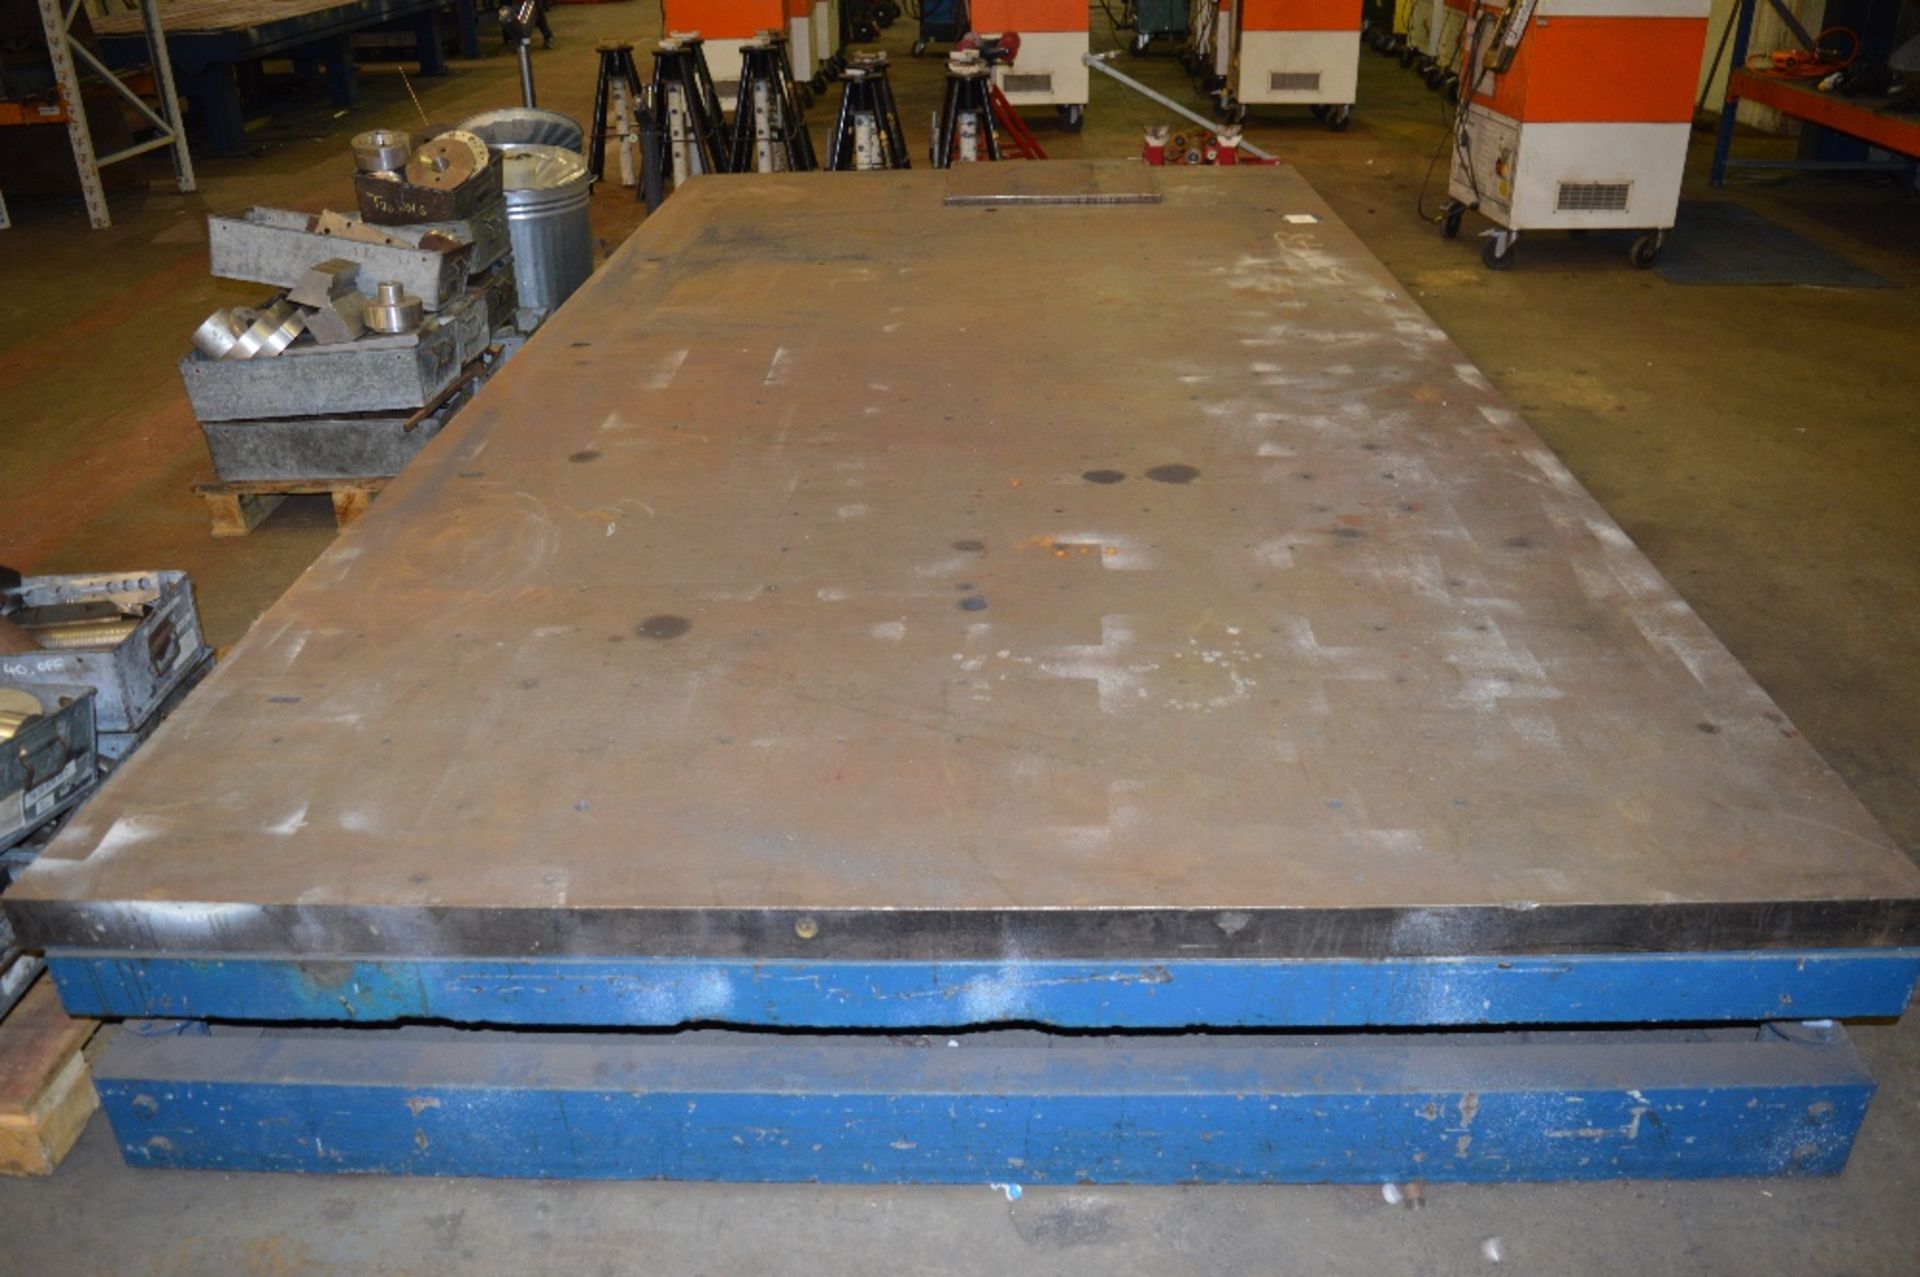 Steel Welding Bench
4.30m (w) x 2.18m (d) x 0.43m - Image 2 of 3